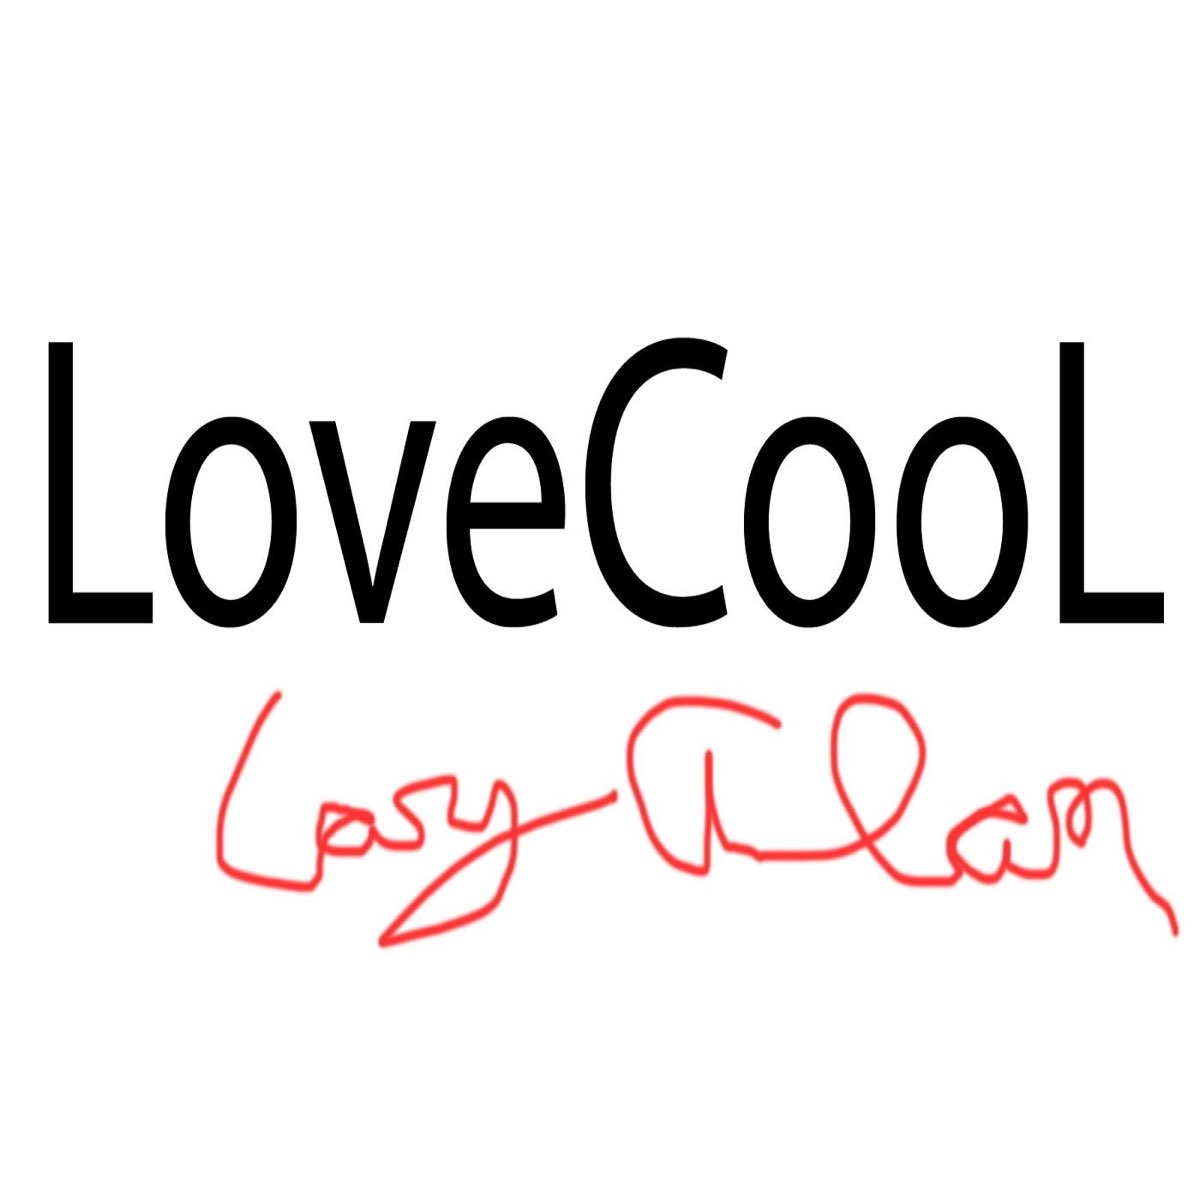 Lovecool